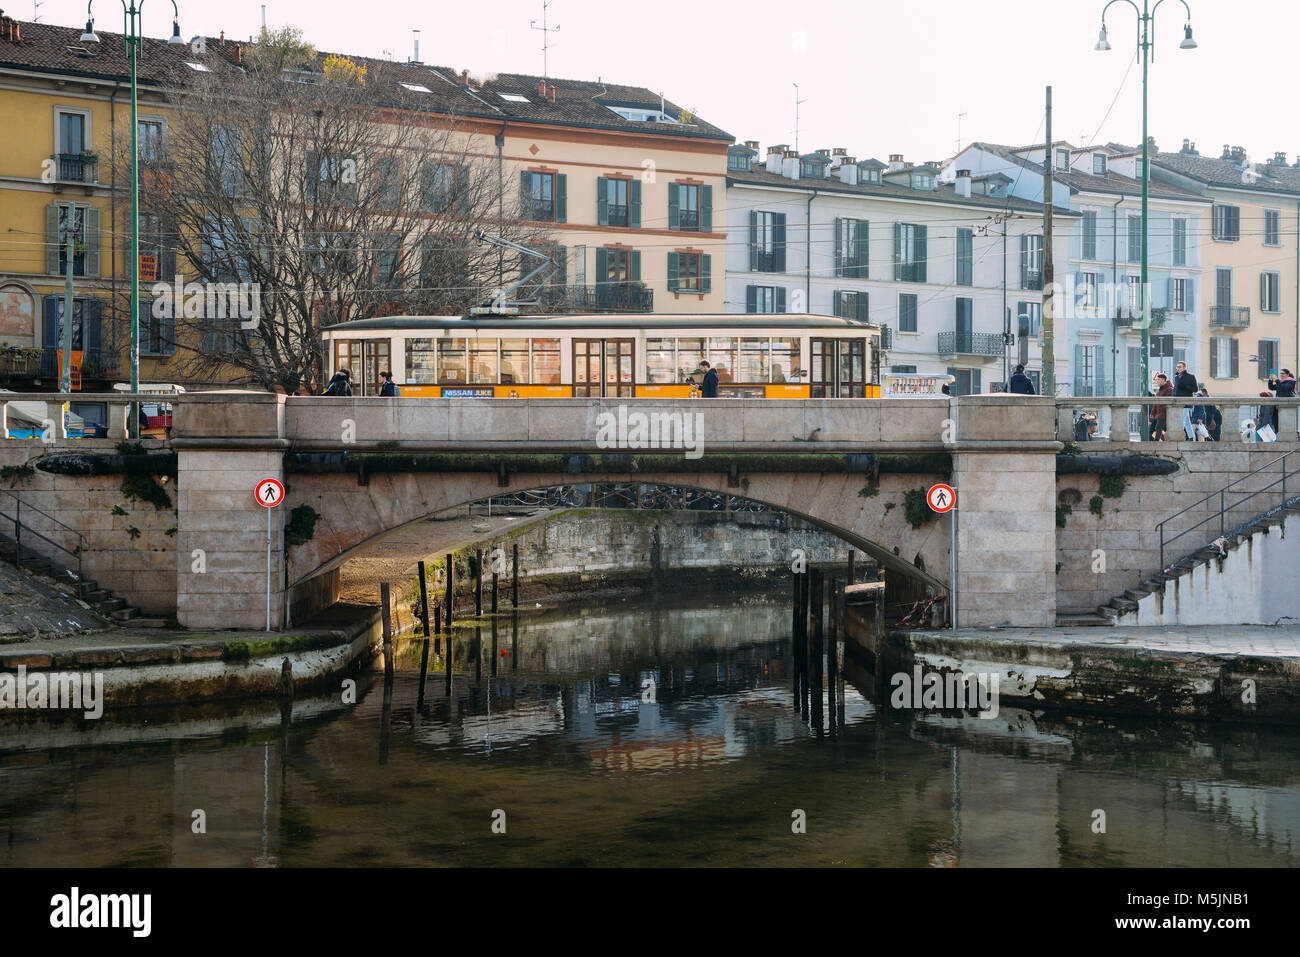 Milan, Italy - Feb 24, 2018: Traditional milanese tram on Naviglio Grande in Milan during winter Stock Photo